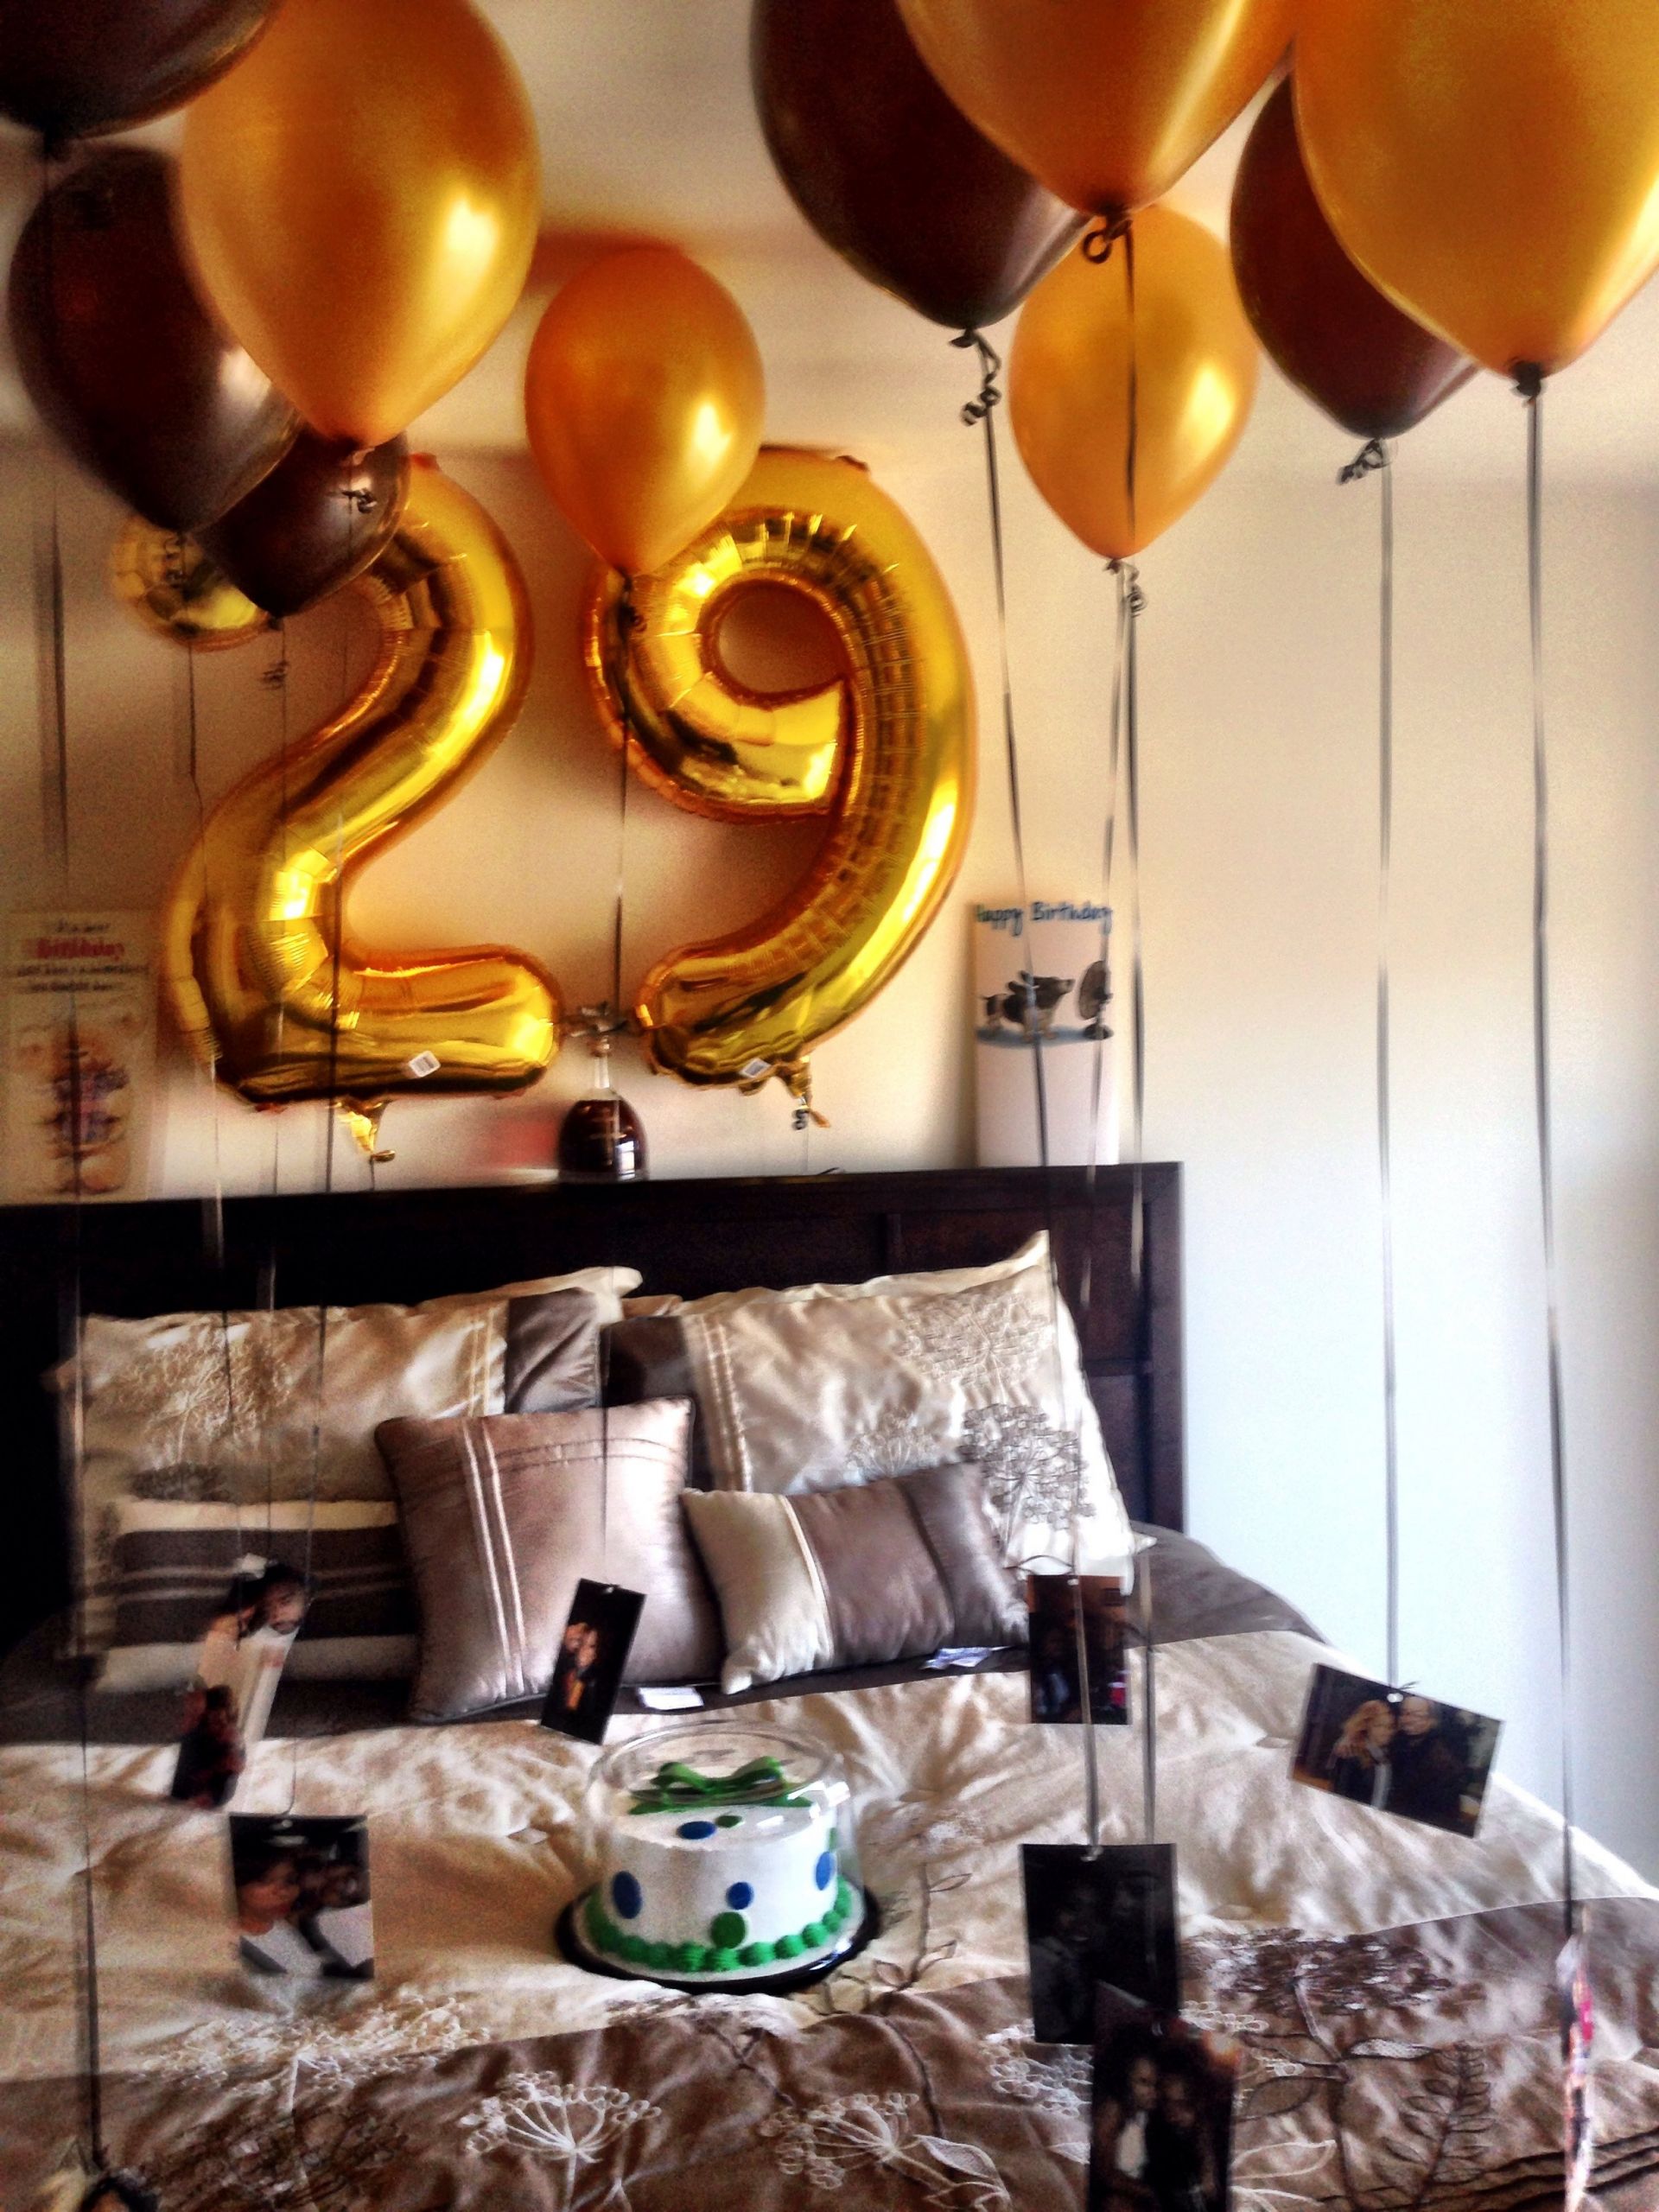 Birthday Gift Ideas For Boyfriends
 10 Stylish Surprise Birthday Ideas For Boyfriend 2021